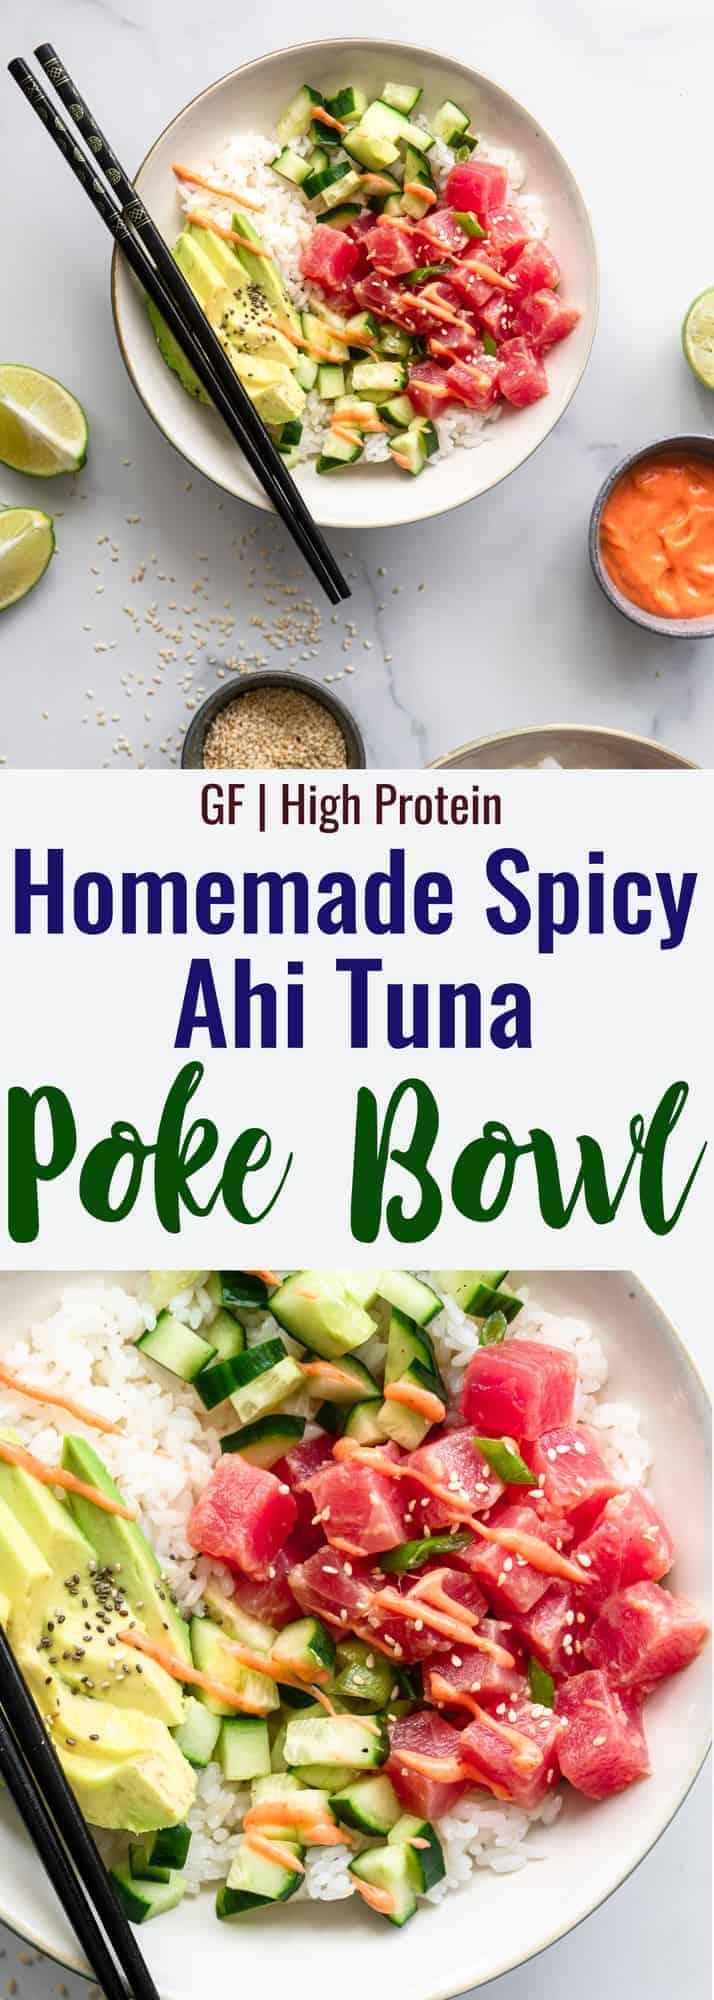 tuna poke bowl recipe collage photo